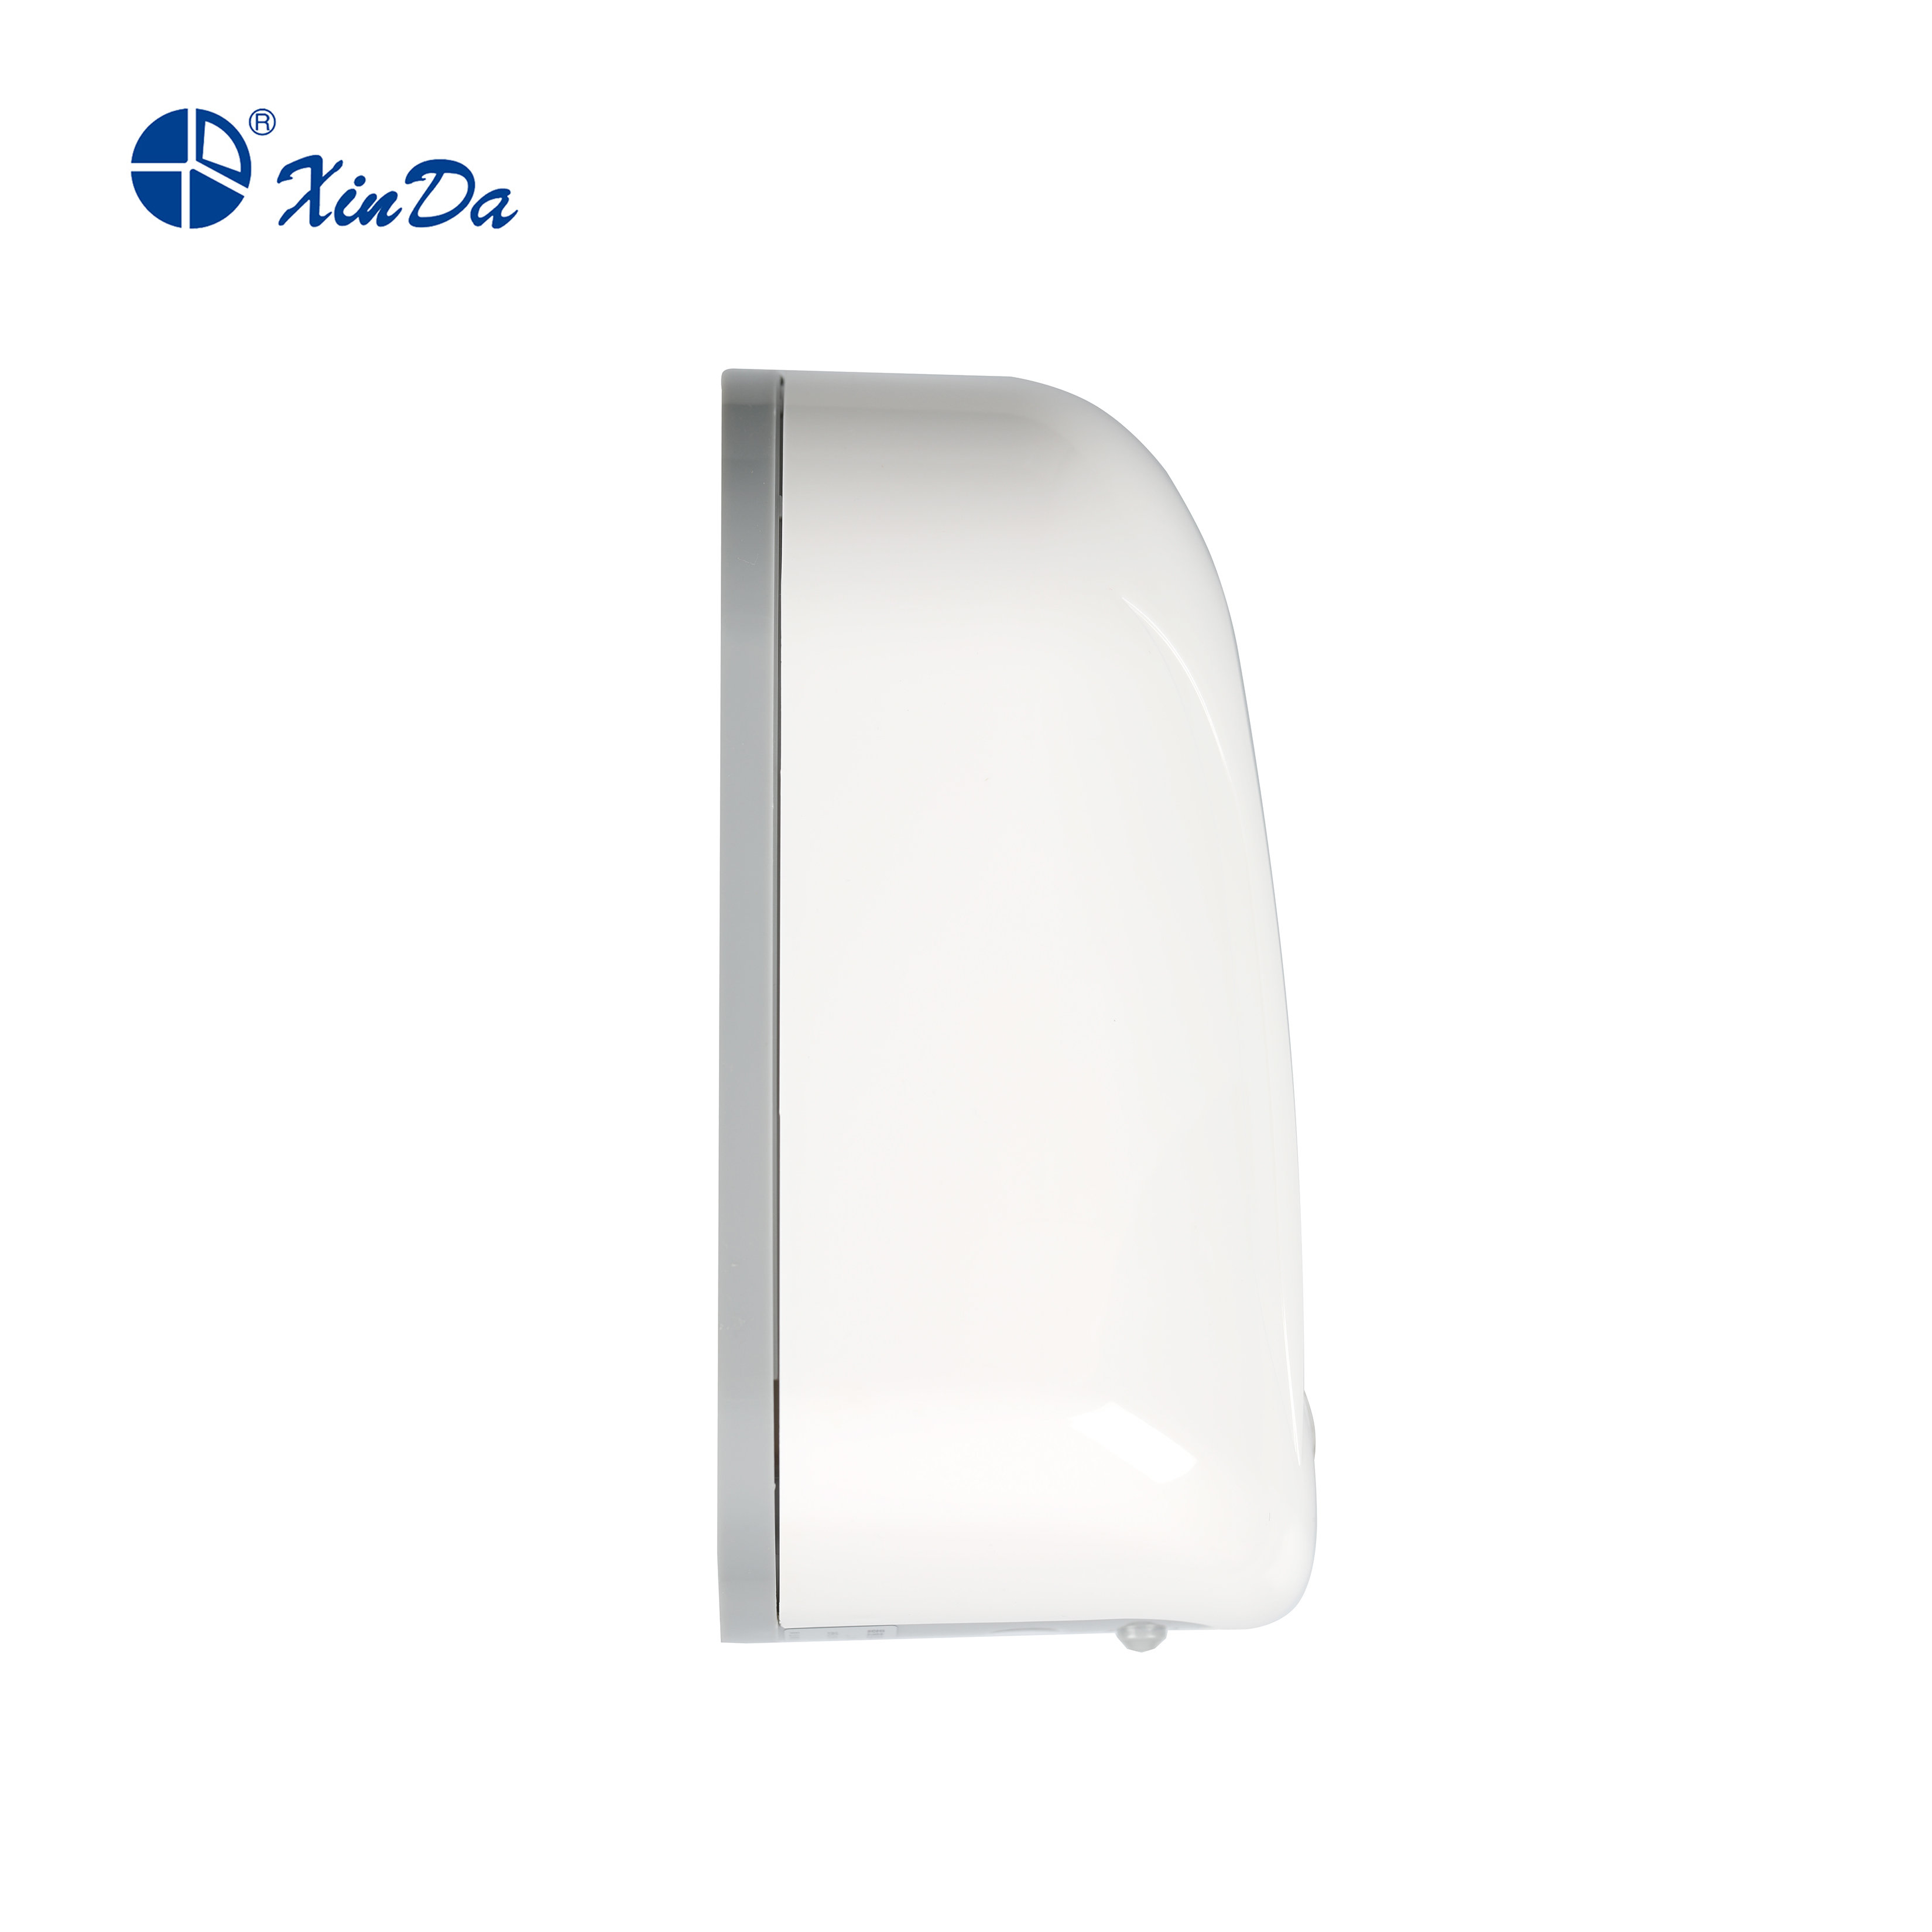 The XinDa ZYQ110 Nuevo Dispensador De Alcohol, Best Wall Mounted Bathroom Induction Automatic Sensor Soap Dispenser